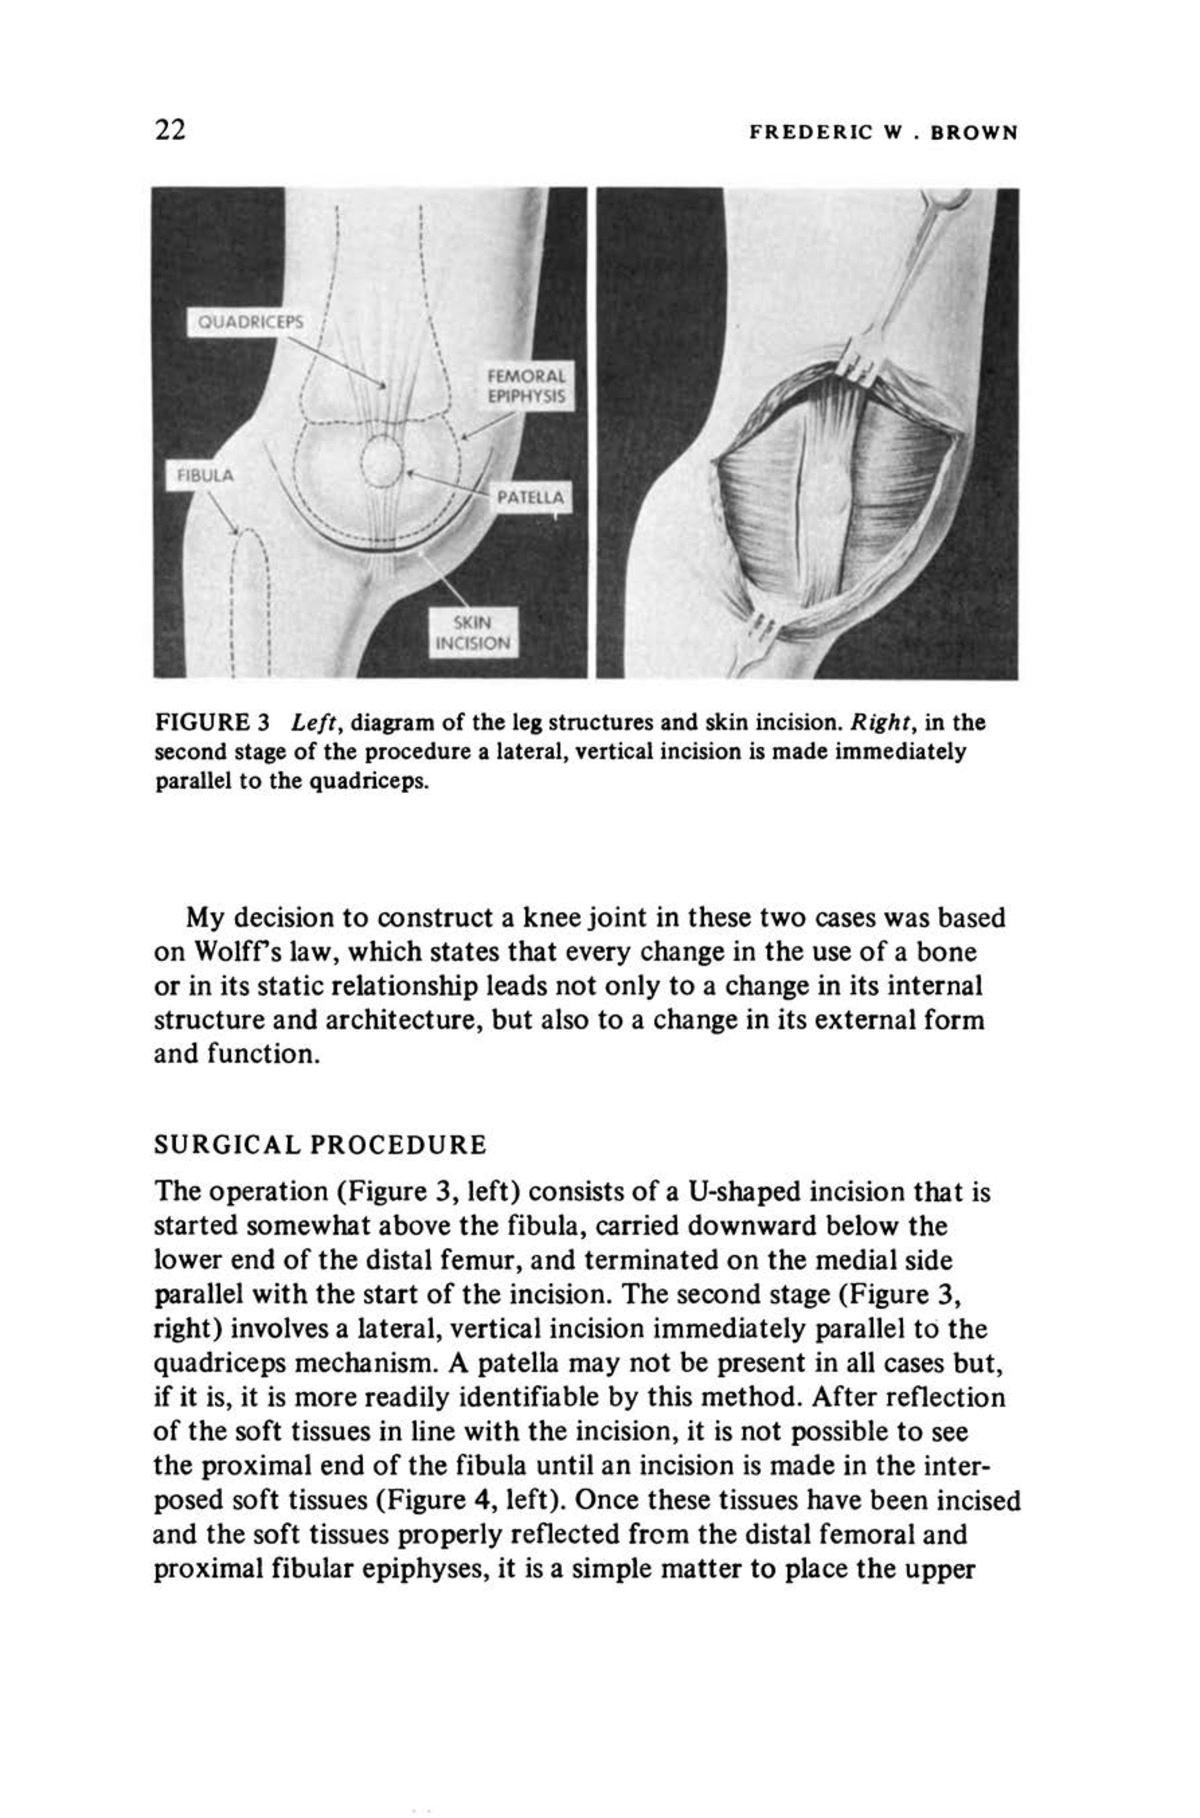 fibular hemimelia diagram